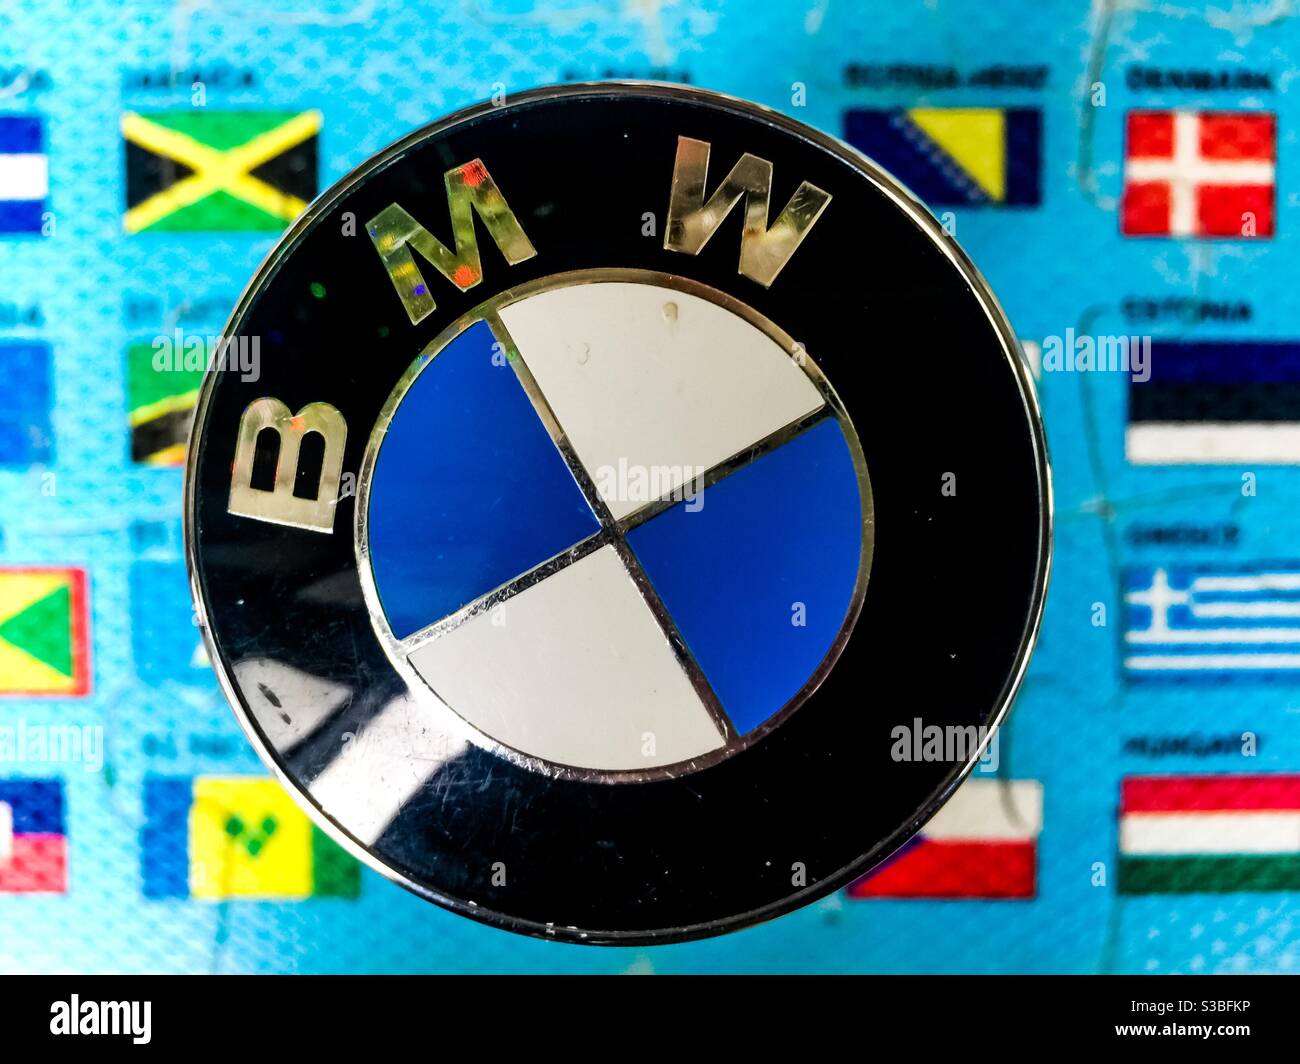 Emblema BMW azul sobre fondo negro Fotografía de stock - Alamy